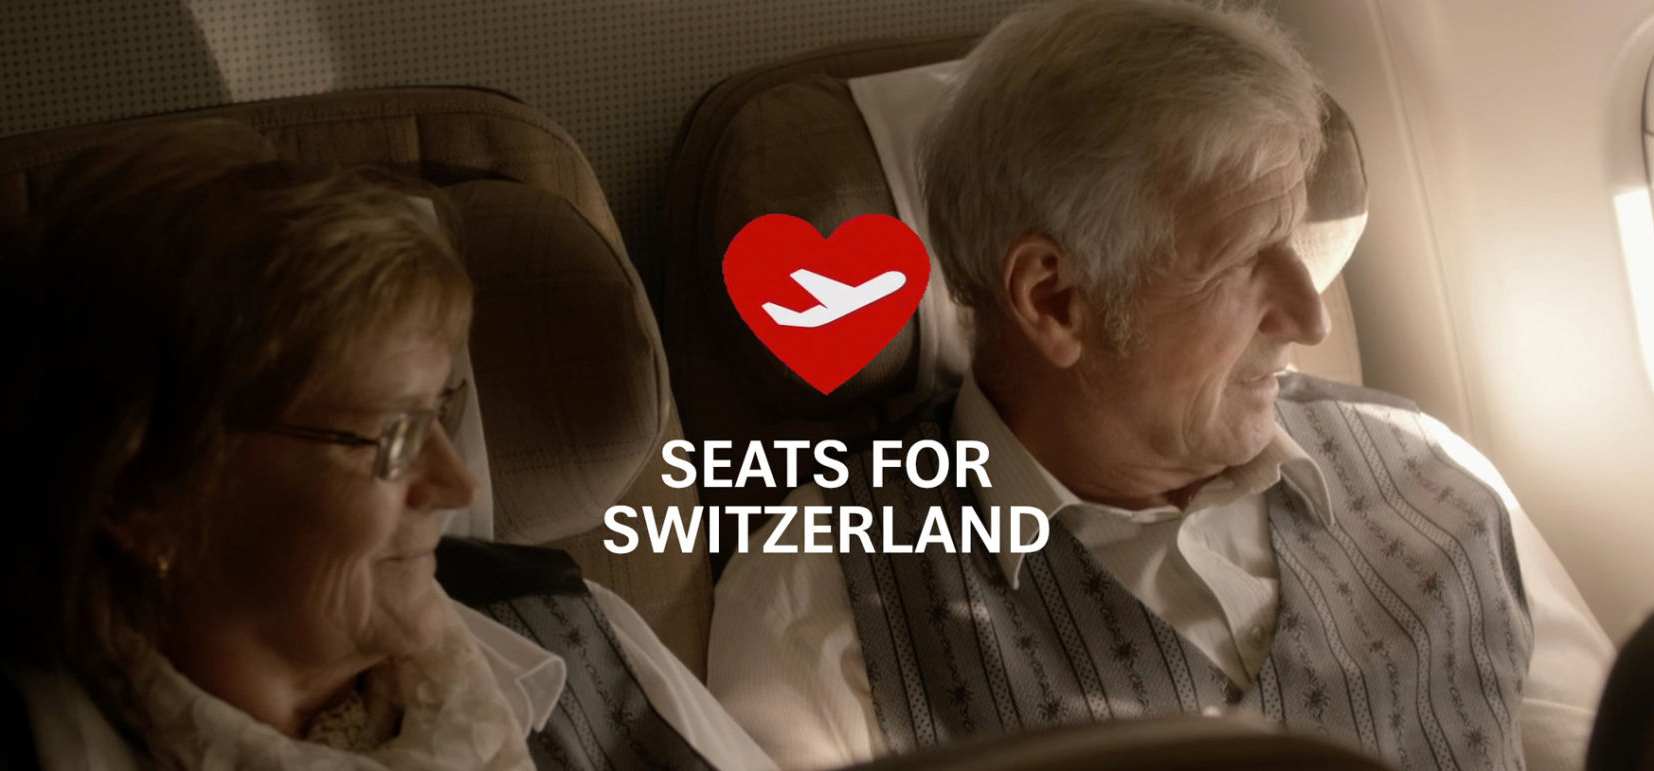 SWISS Publicis Seats For Switzerland 1900x814